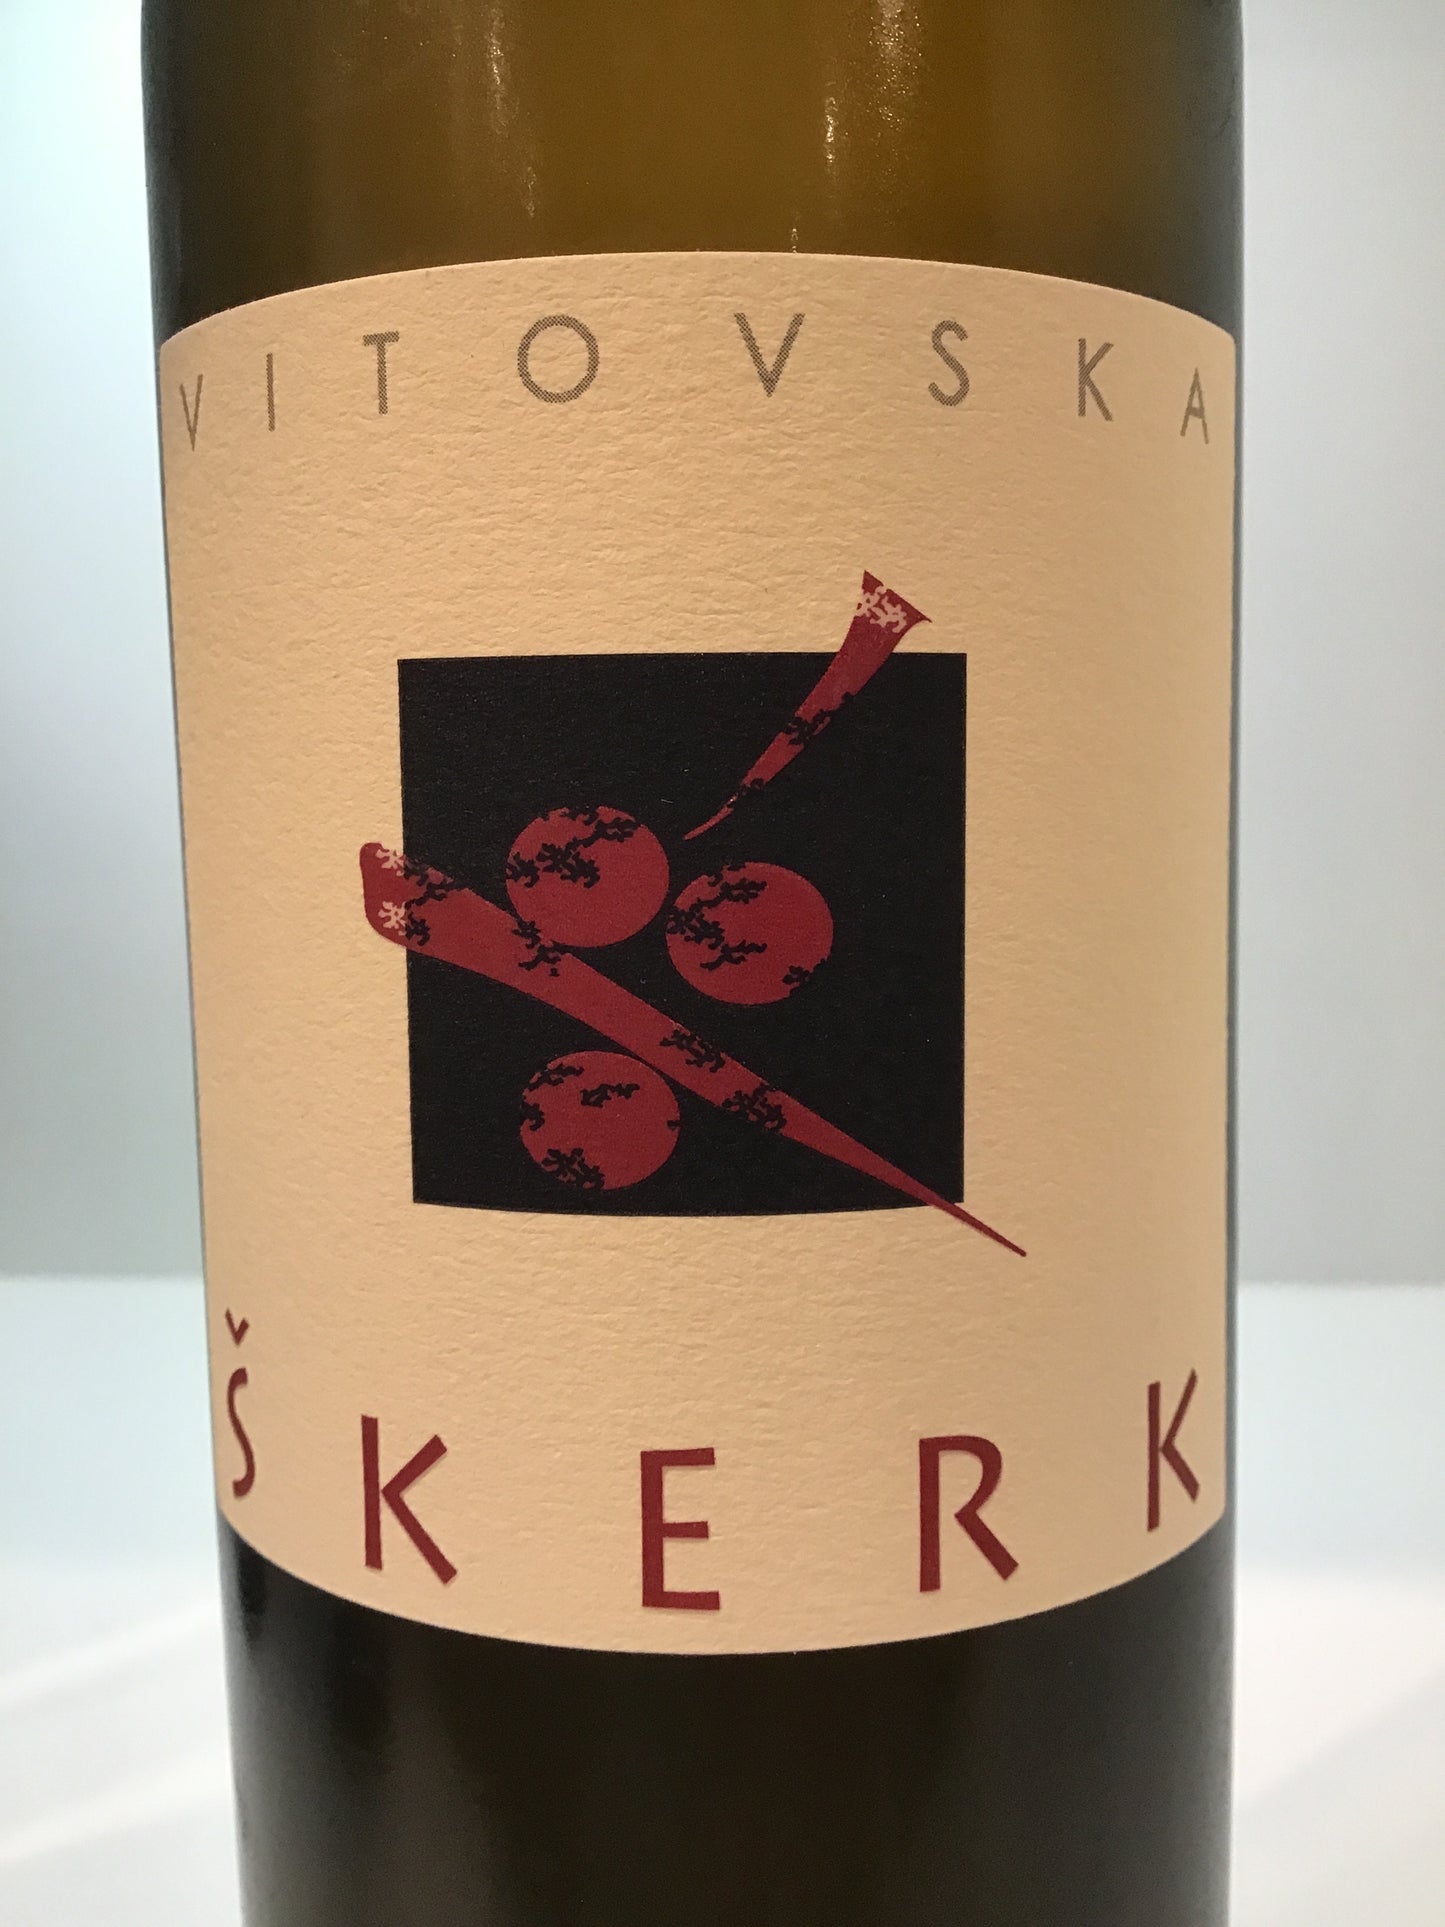 Skerk - Vitovska